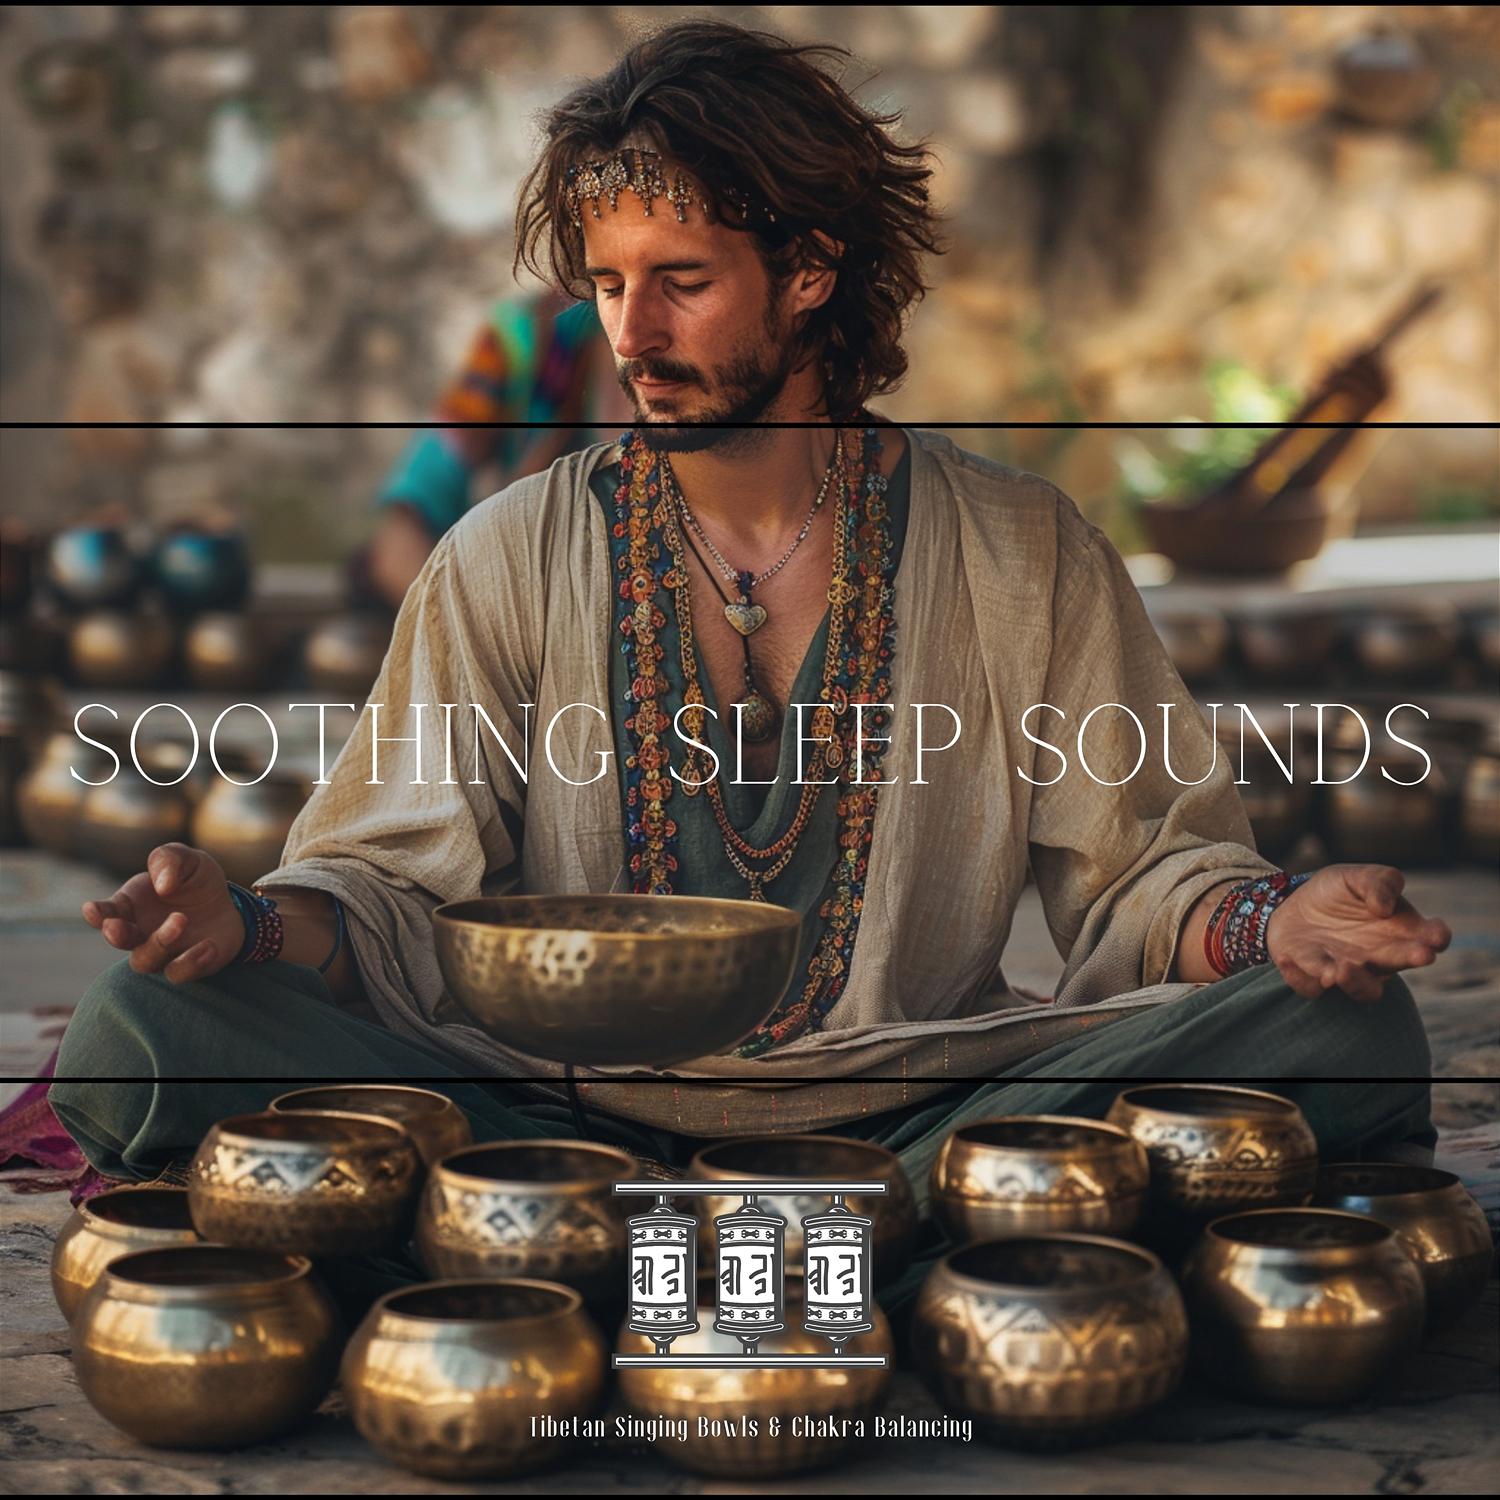 Tibetan Singing Bowls & Chakra Balancing - Are We There yet